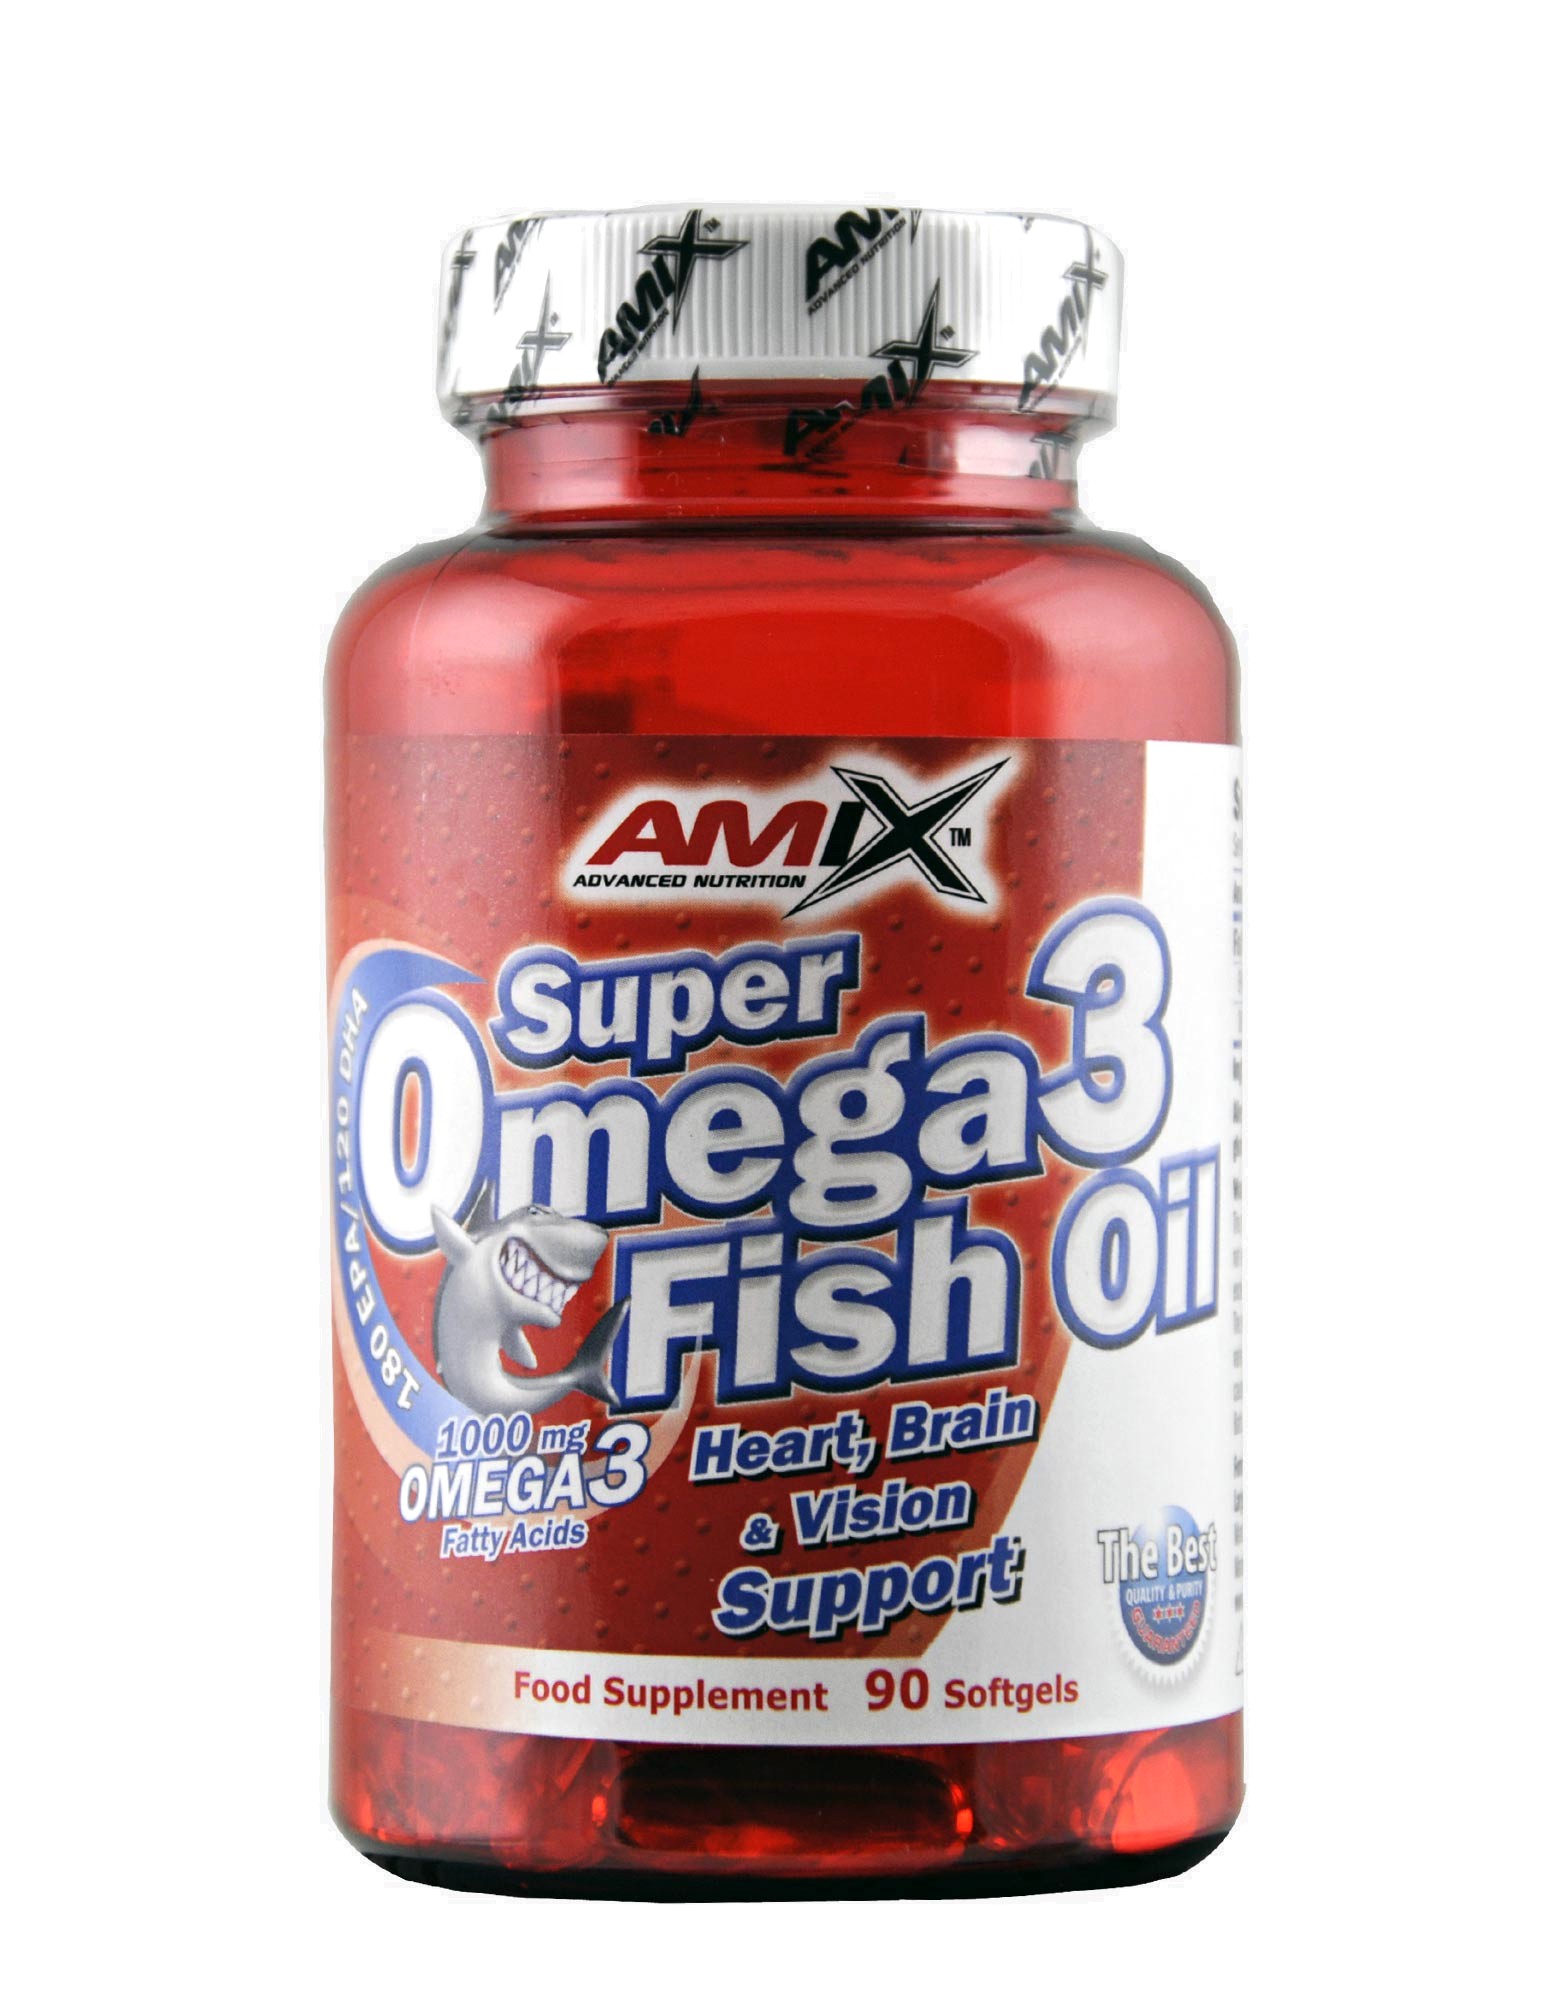 Super Omega 3 Fish Oil by AMIX (90 softgel pearls)